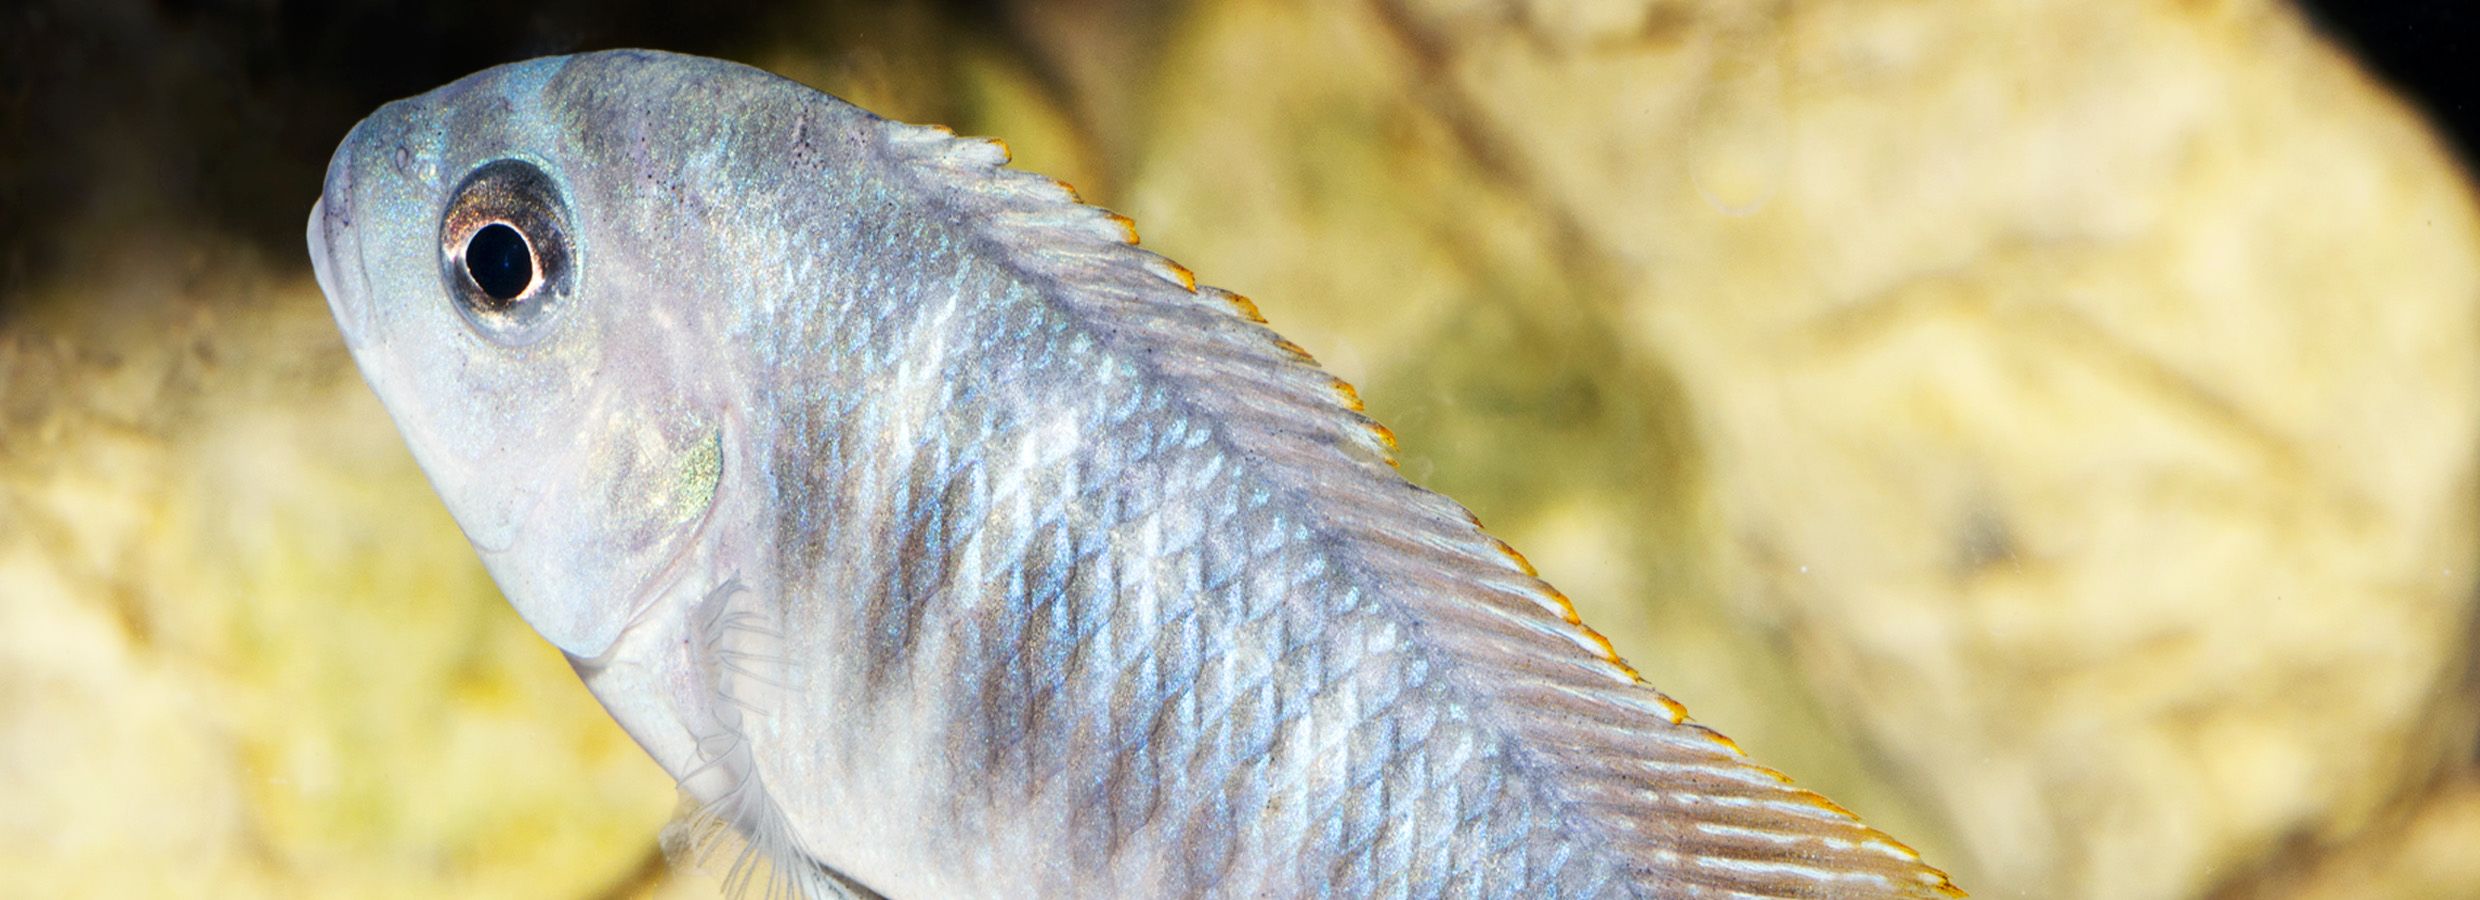 Aquarium Sand White Gravel Fish Tank Substrate for Malawi Cichlid